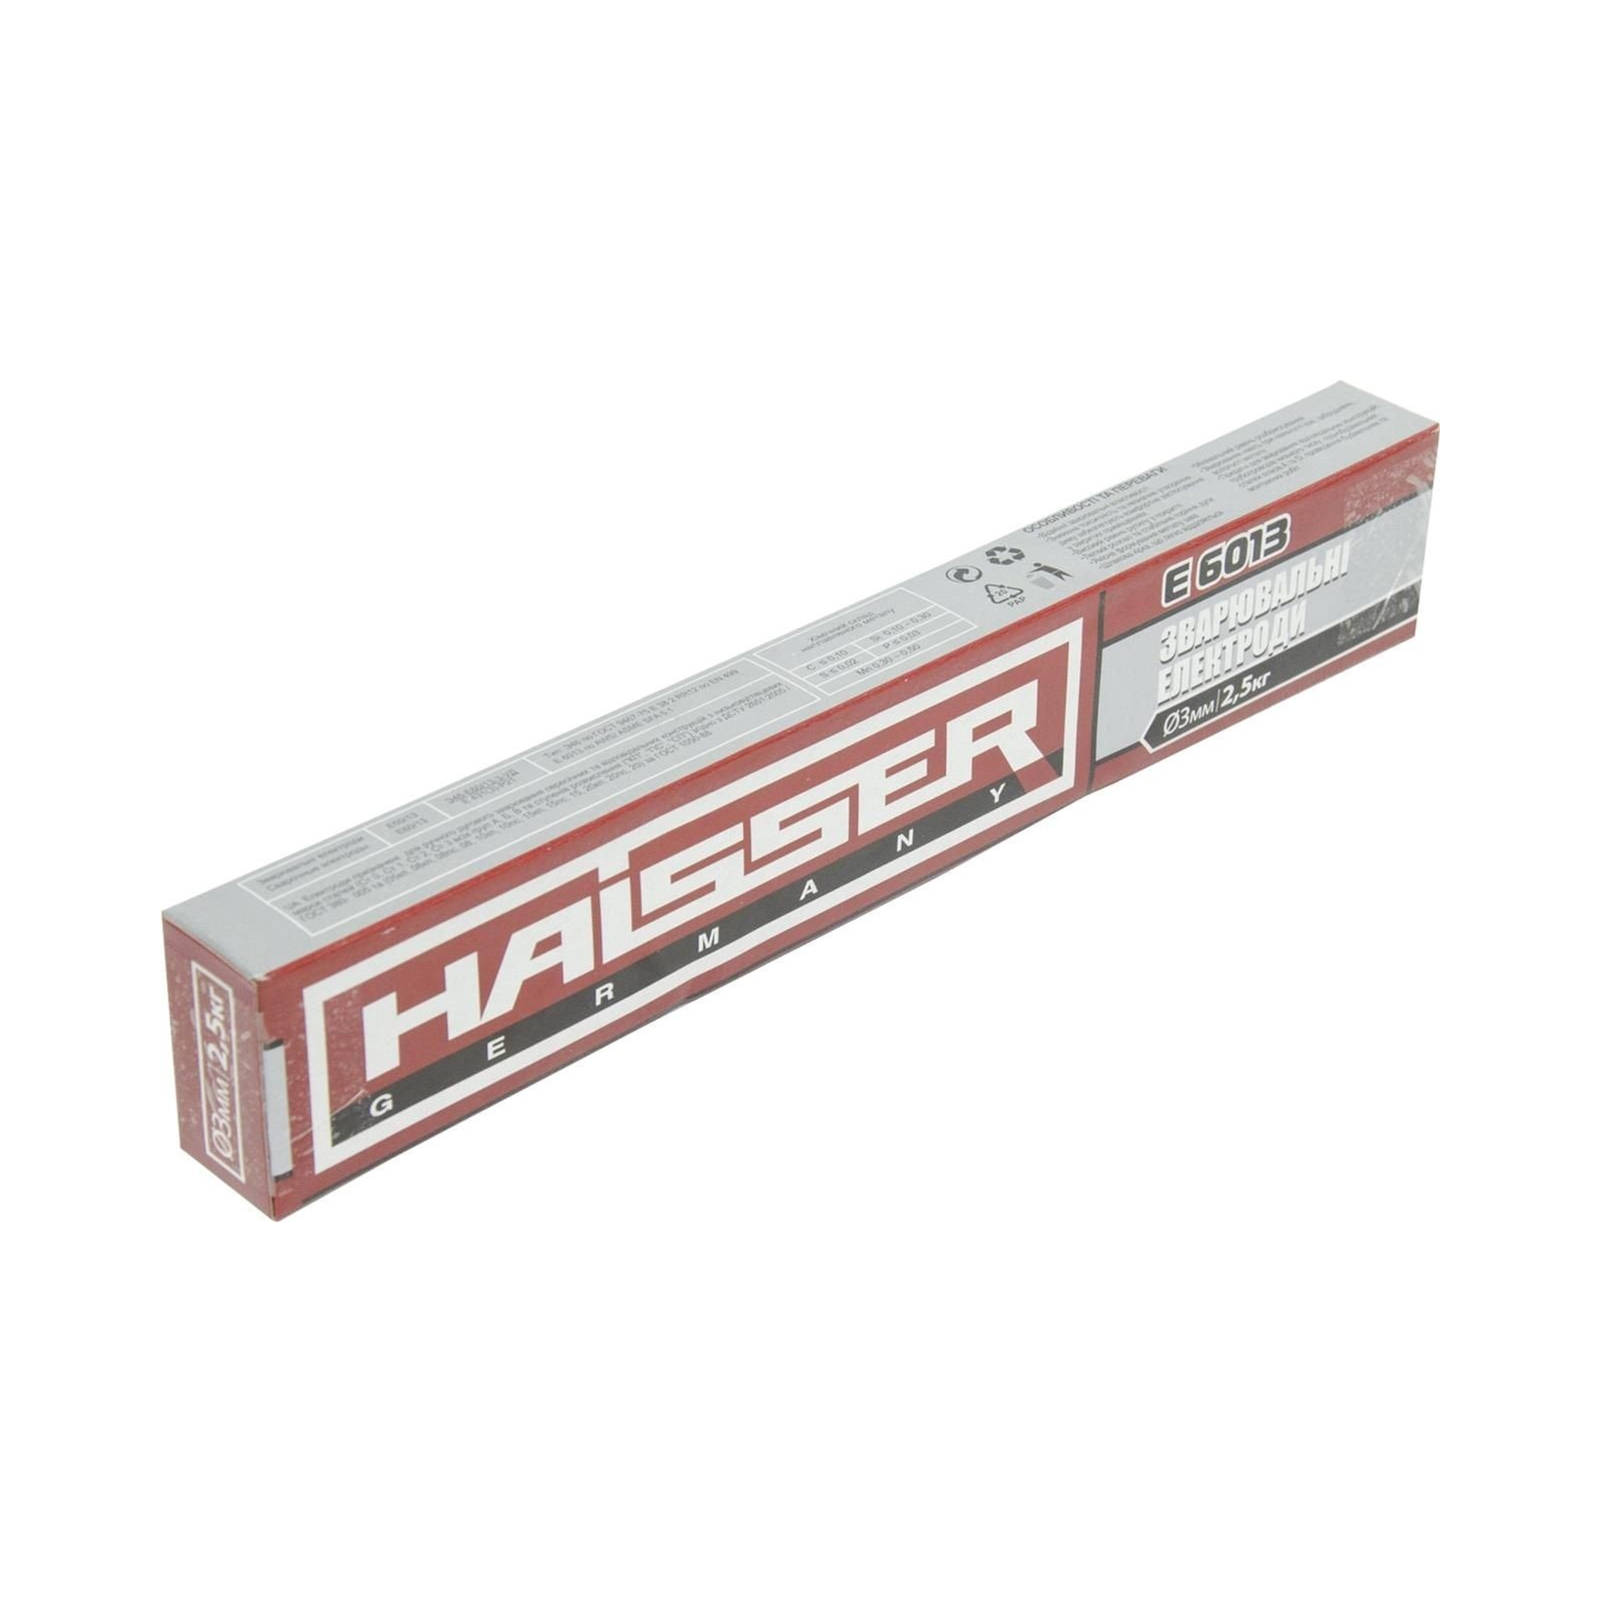 Електроди HAISSER E 6013, 3.0мм, 5кг (63817)